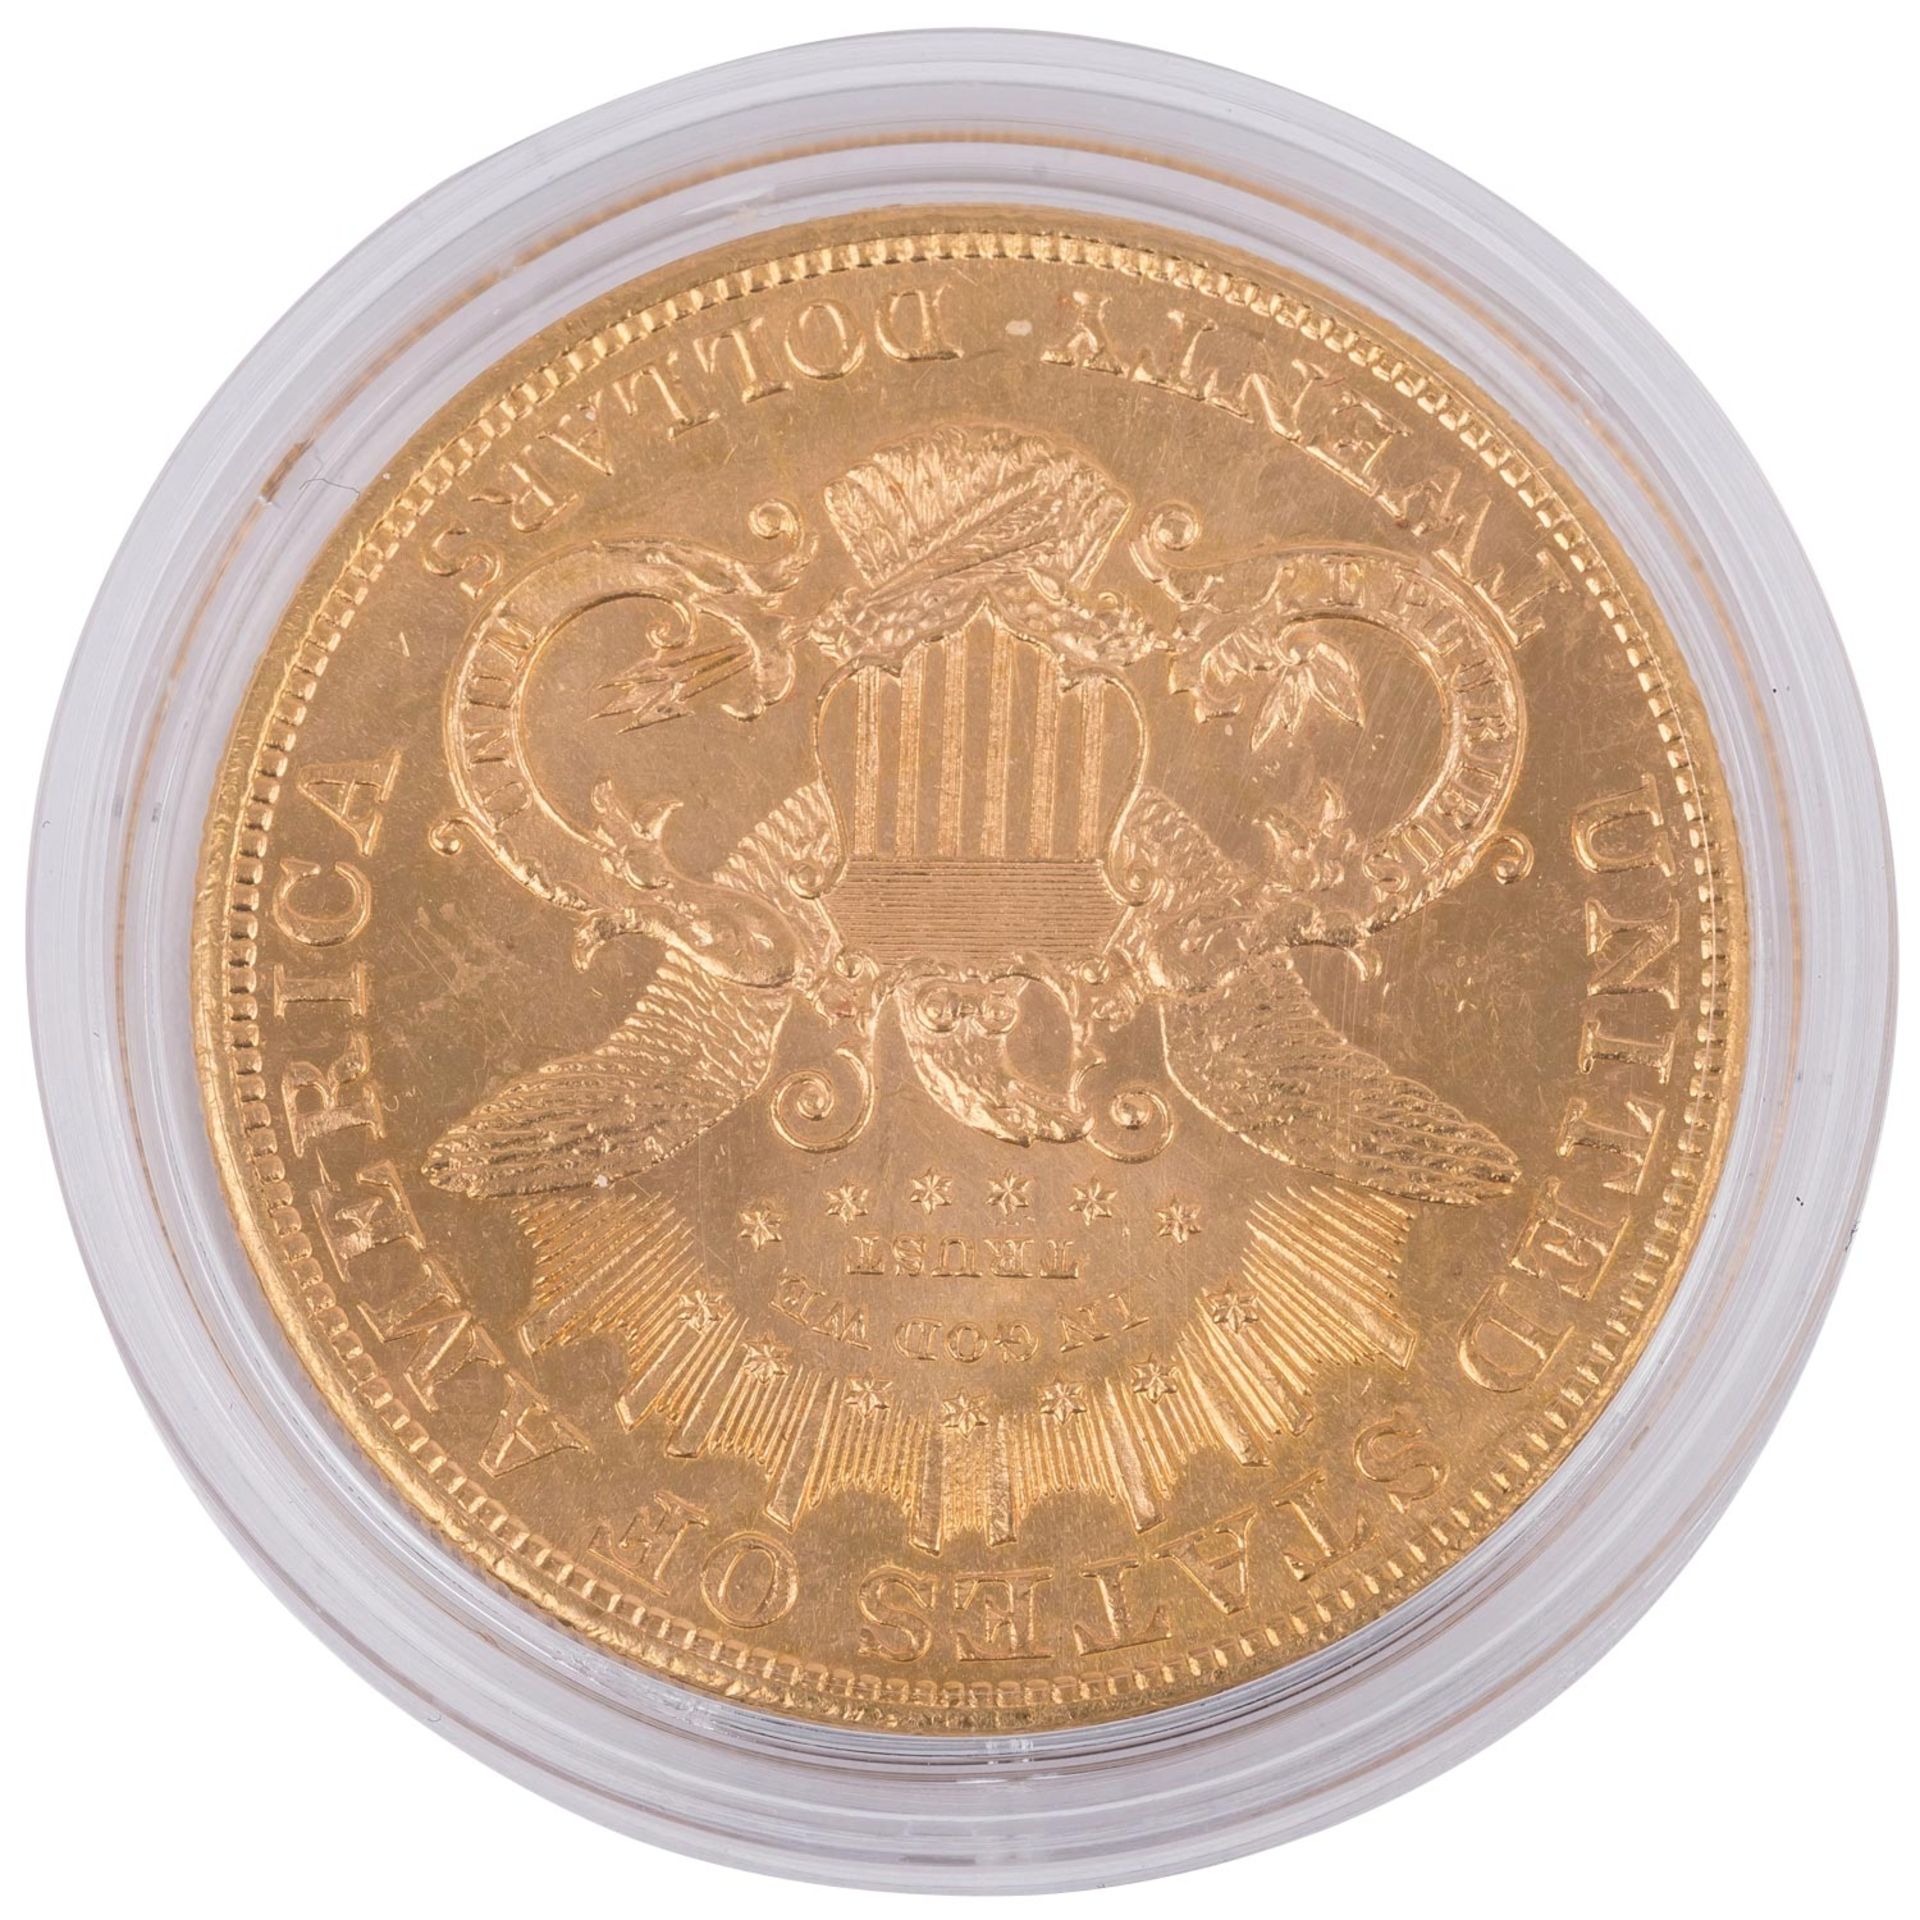 USA /GOLD - 20$ Double Eagle - Liberty Head 1904 - Image 2 of 2